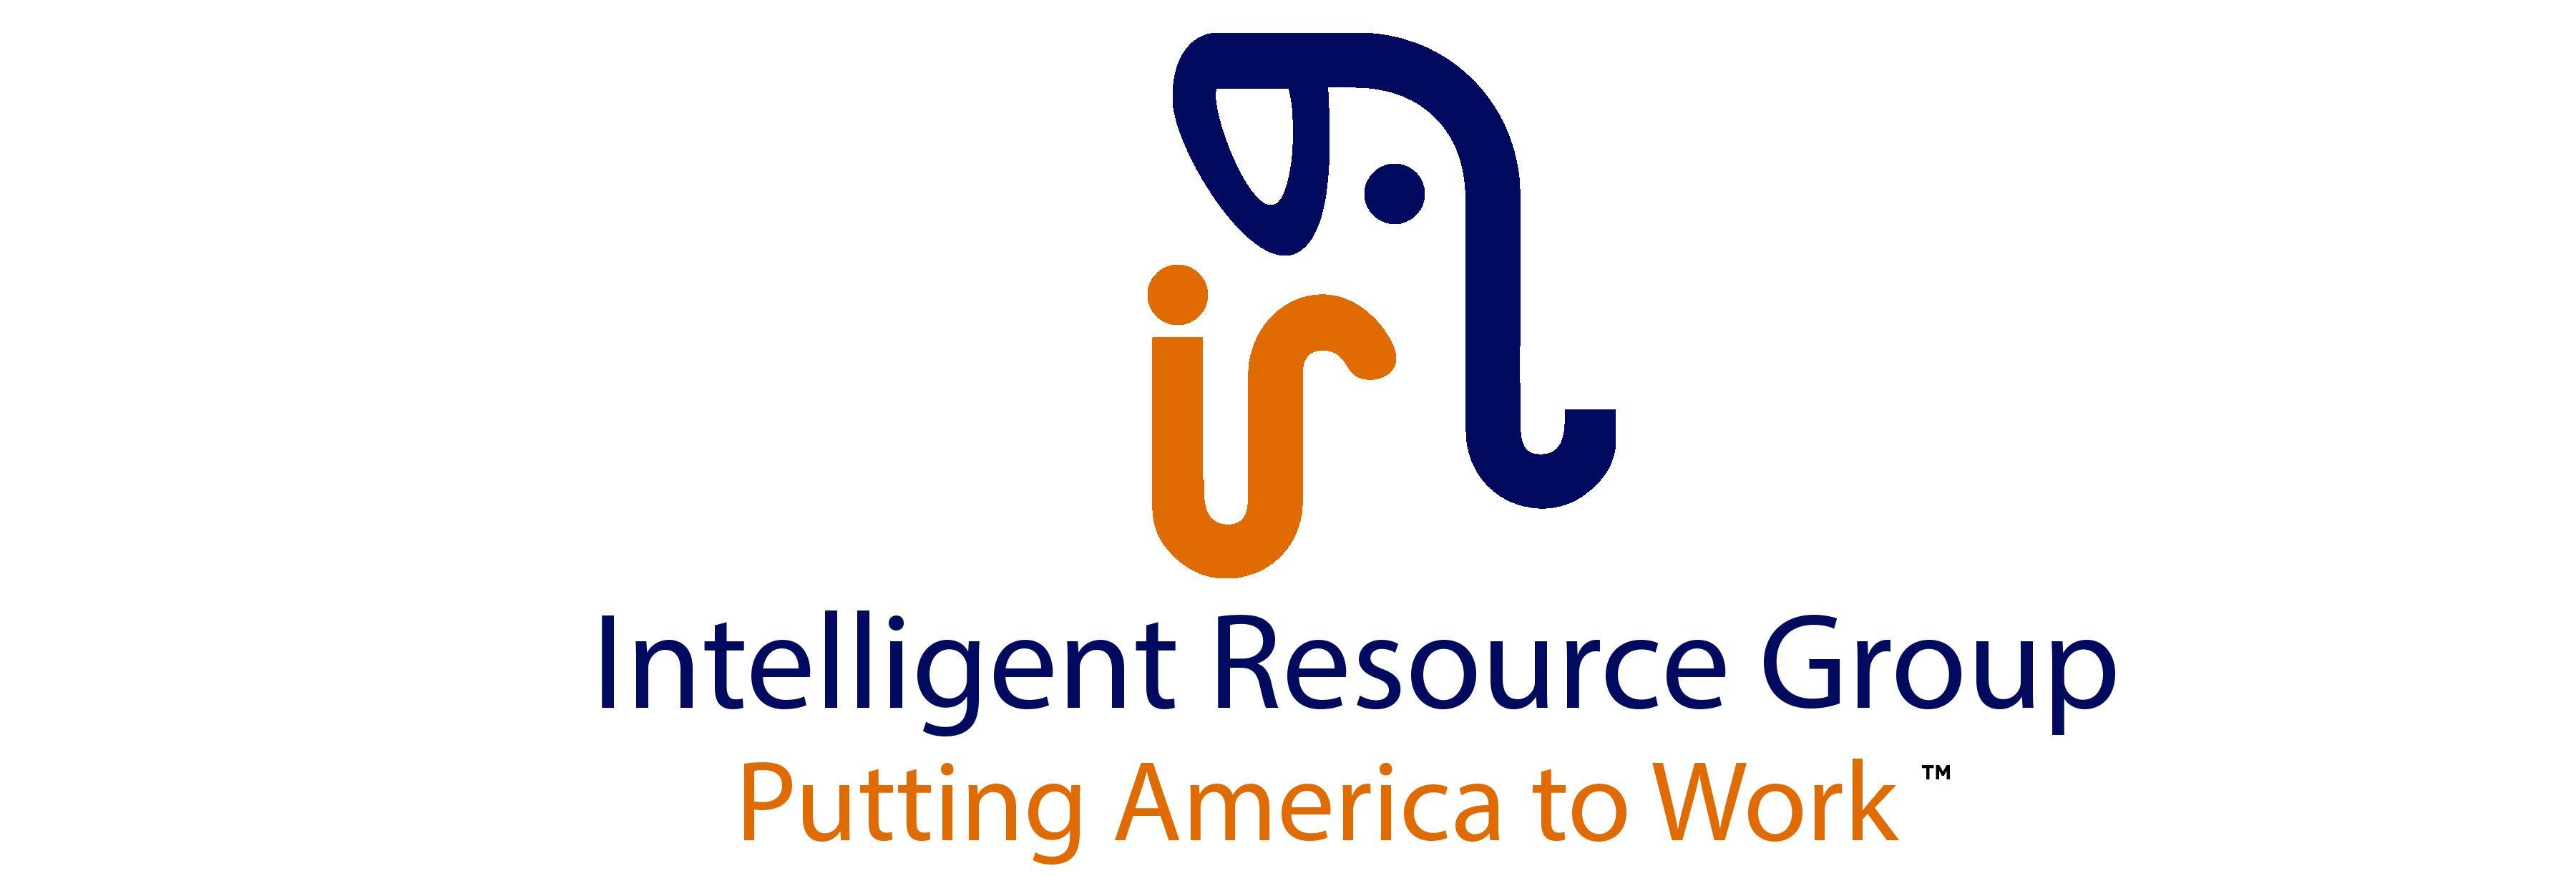 IRG Logo - IRG LOGO 2018 | Intelligent Resource Group